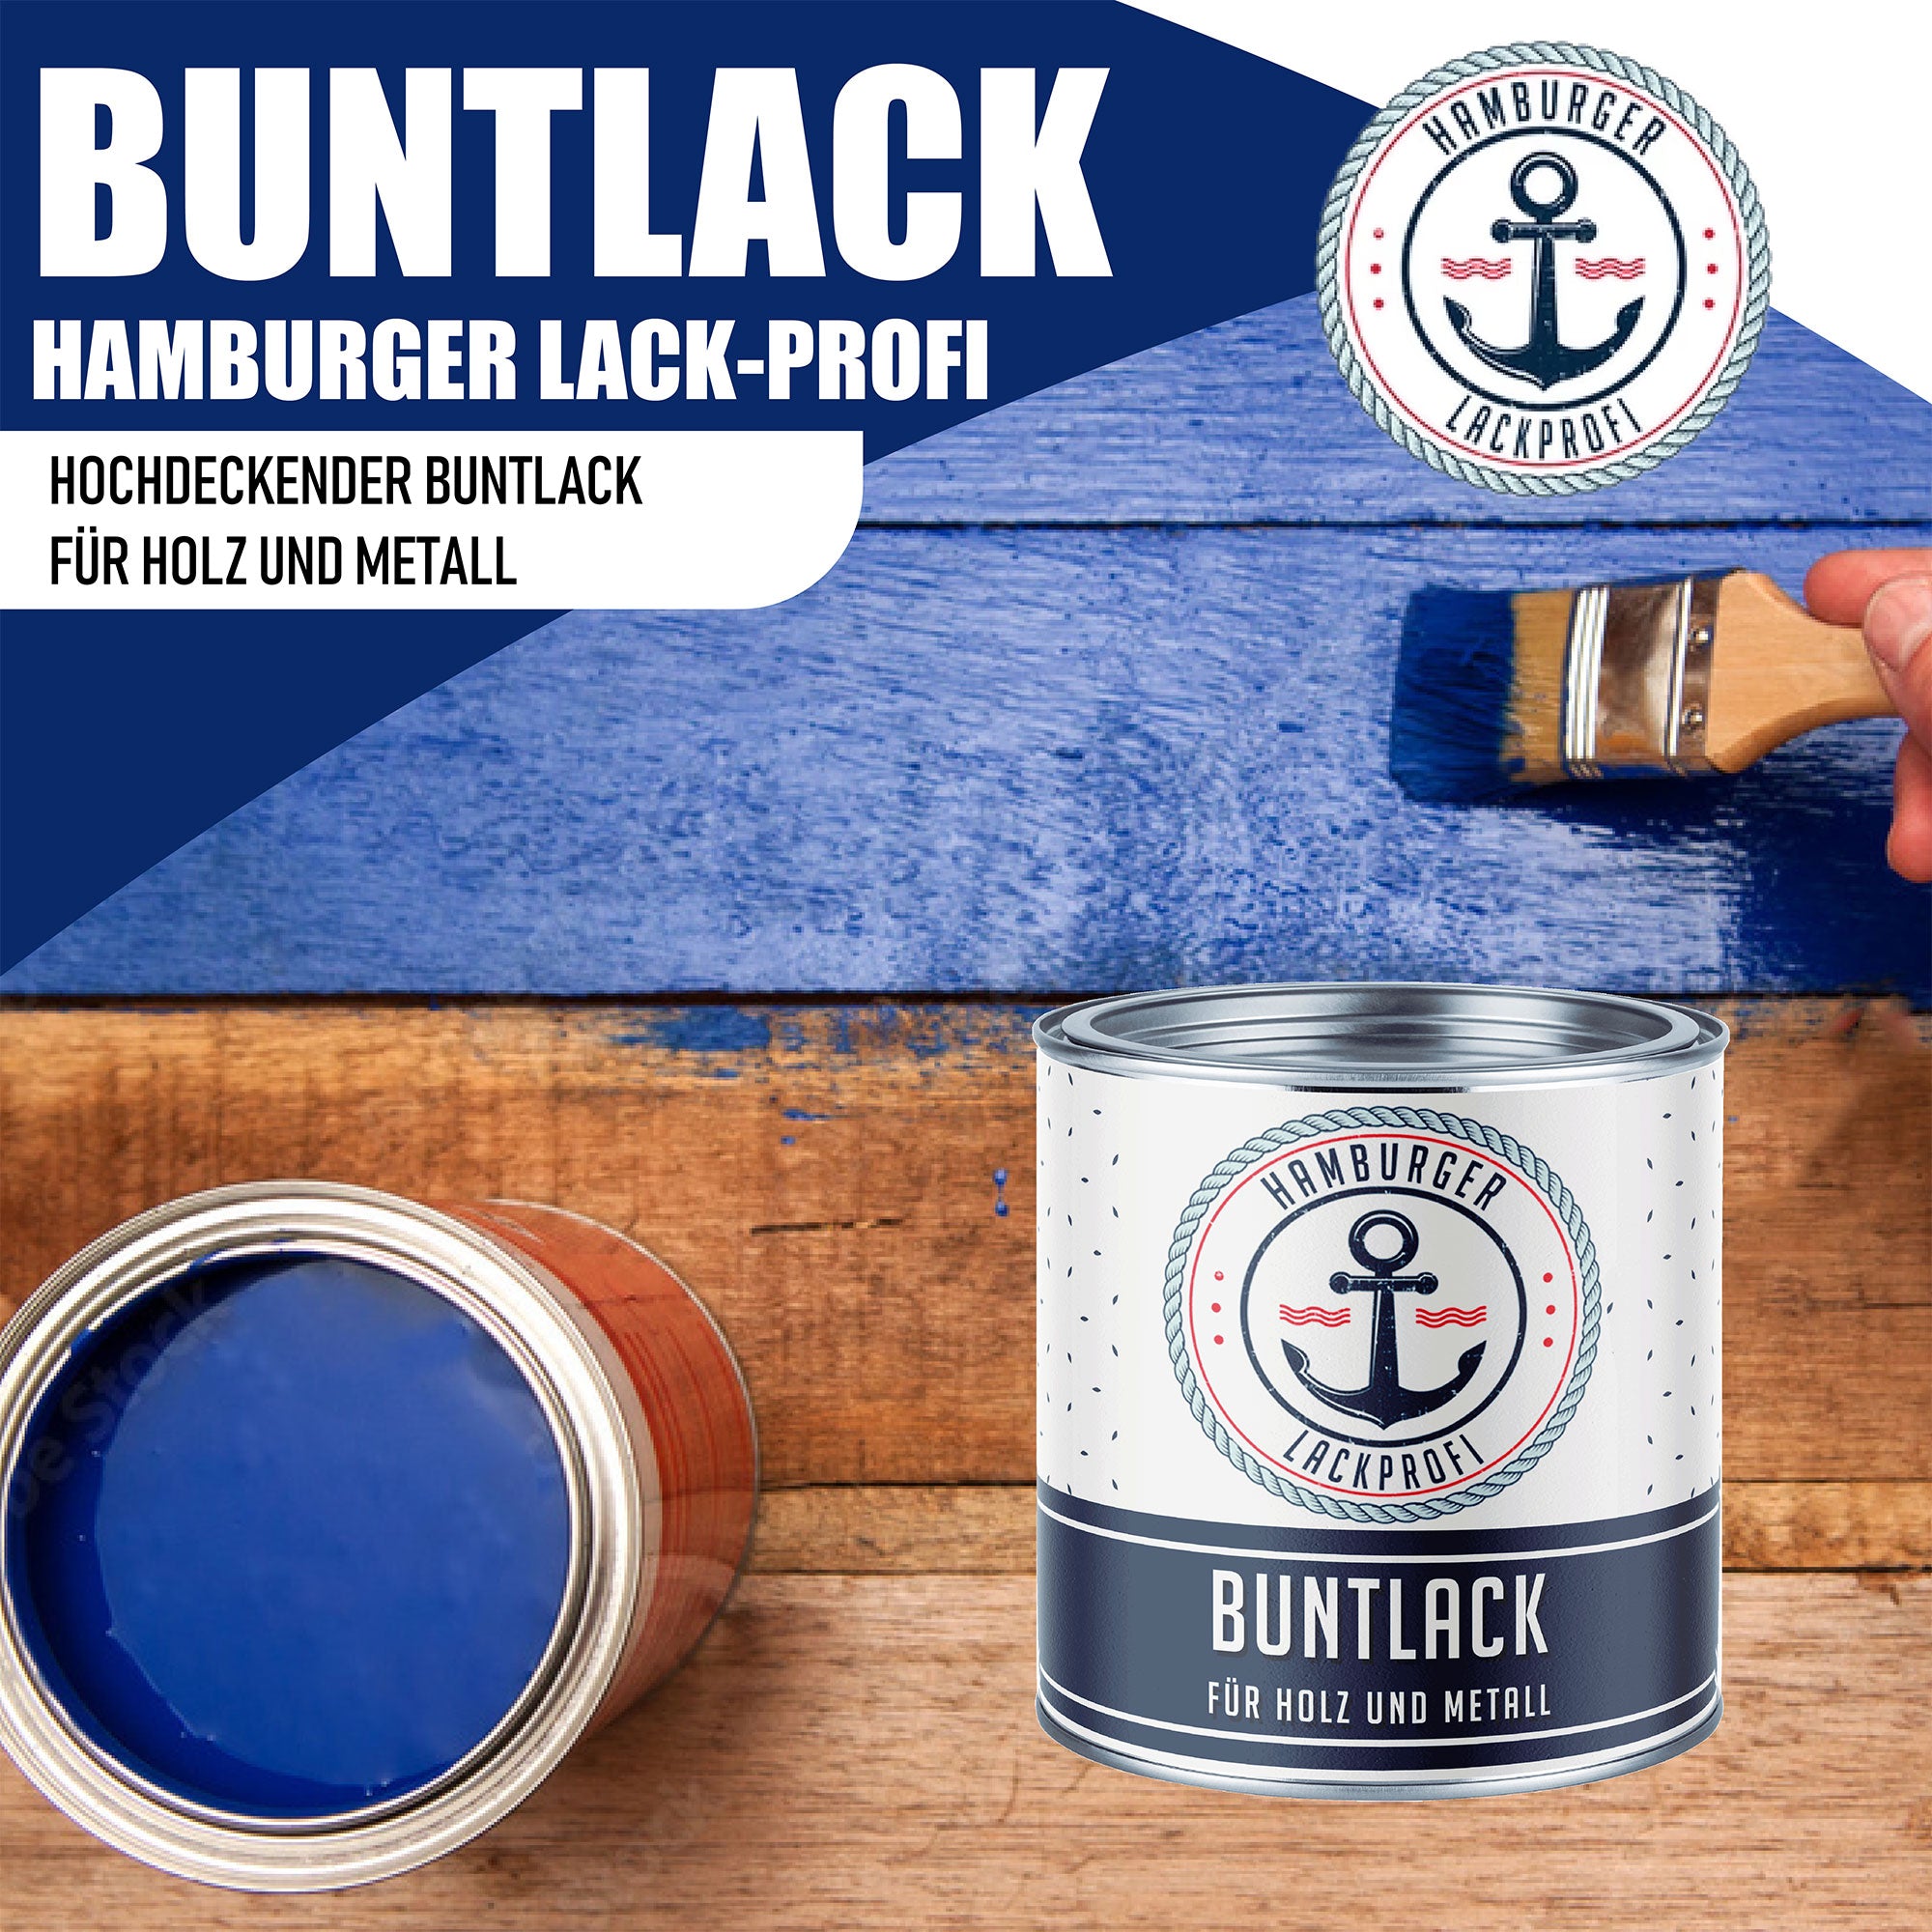 Hamburger Lack-Profi Buntlack Nußbraun RAL 8011 - Robuster Kunstharzlack